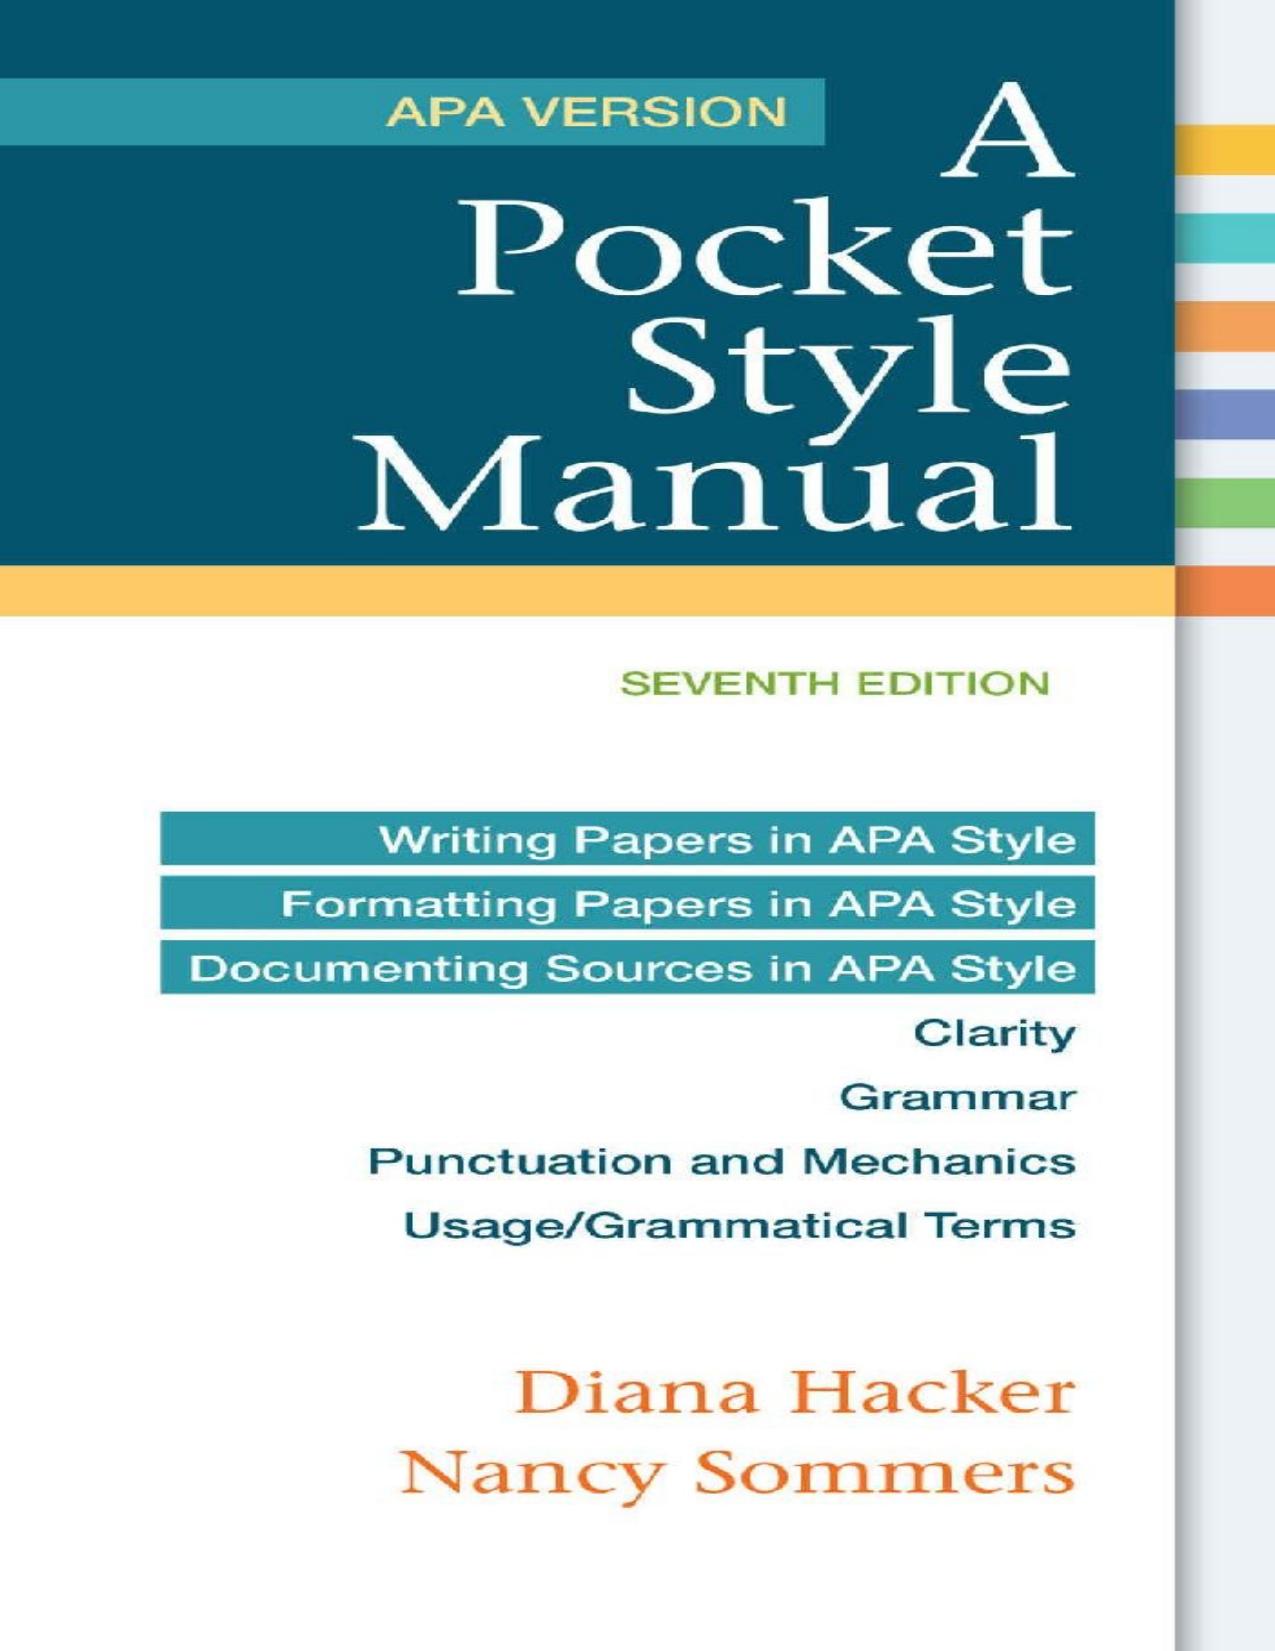 A Pocket Style Manual, APA Version - PDFDrive.com